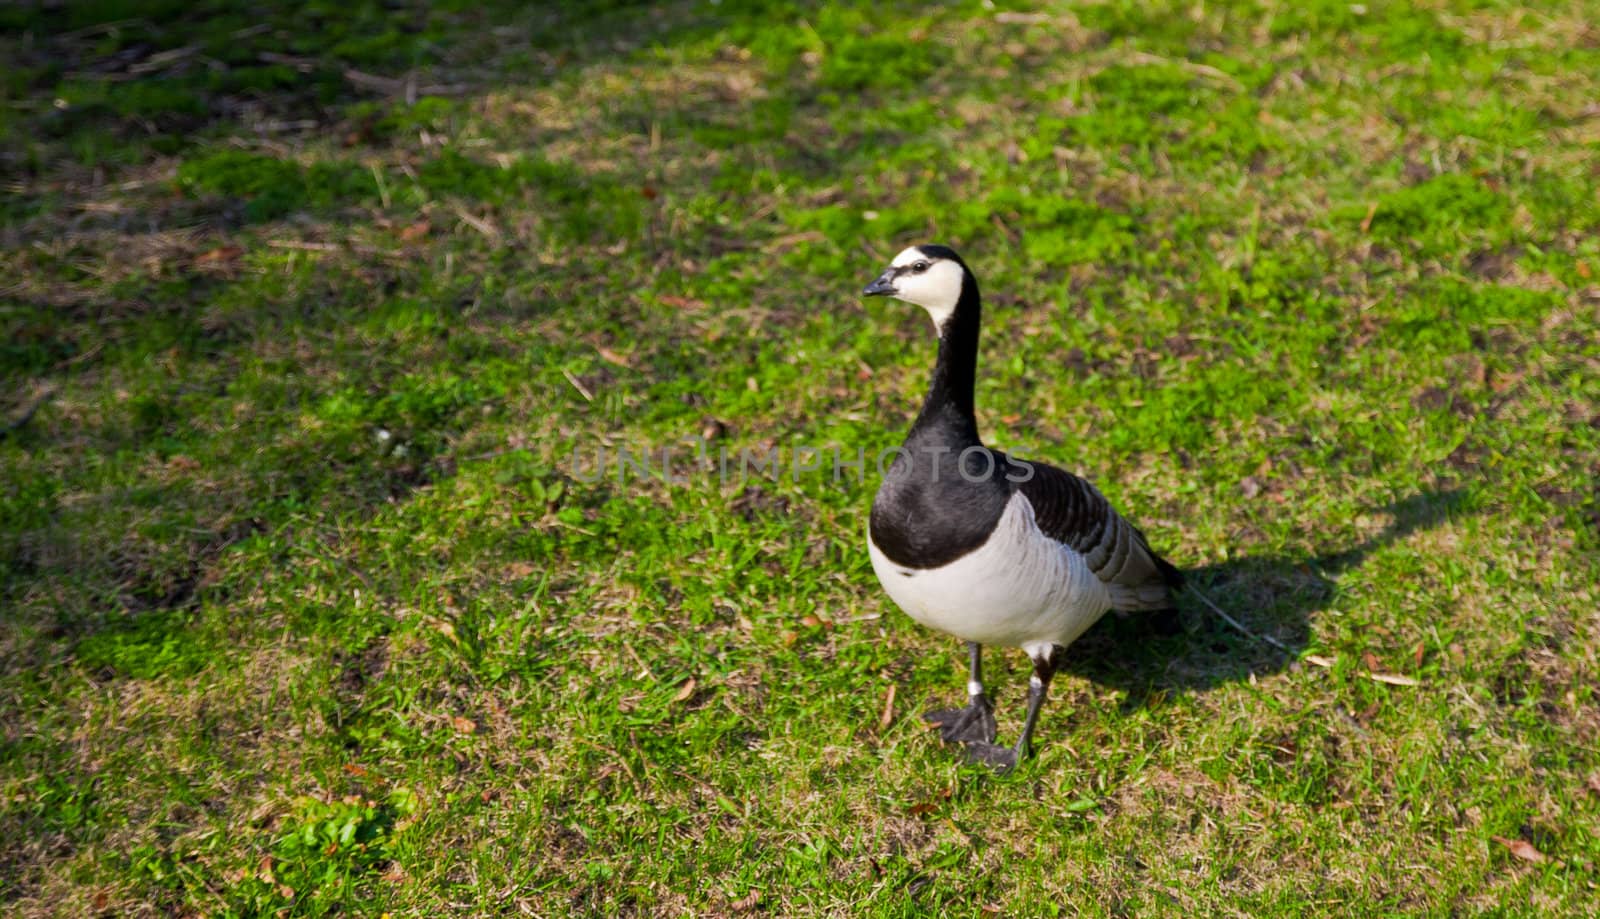 Wild goose on a grass field